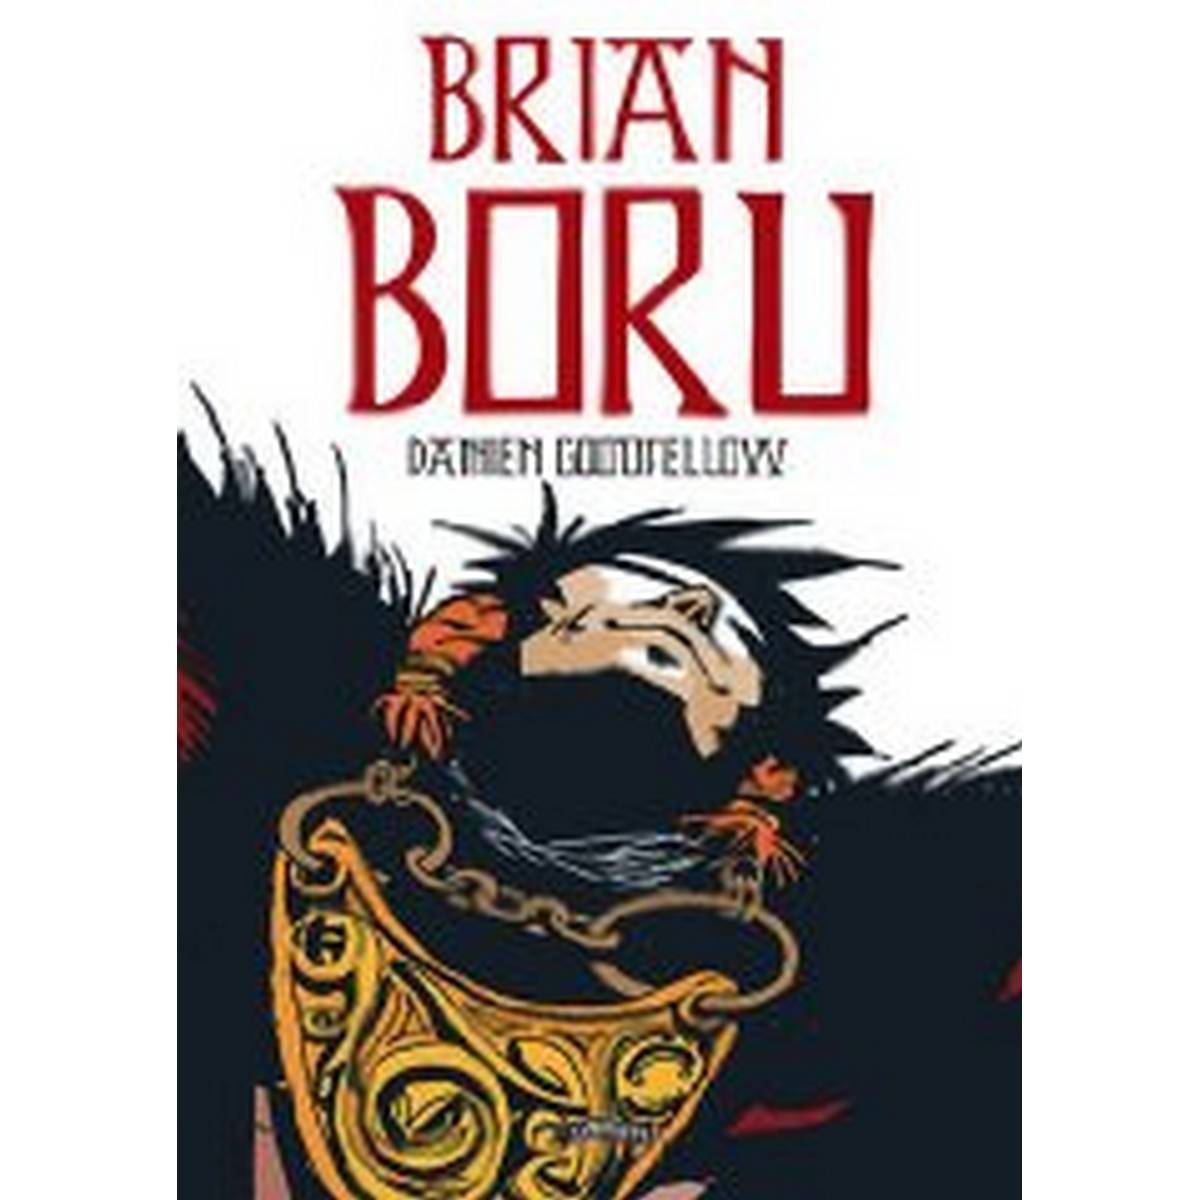 Brian Boru: Ireland's Warrior King